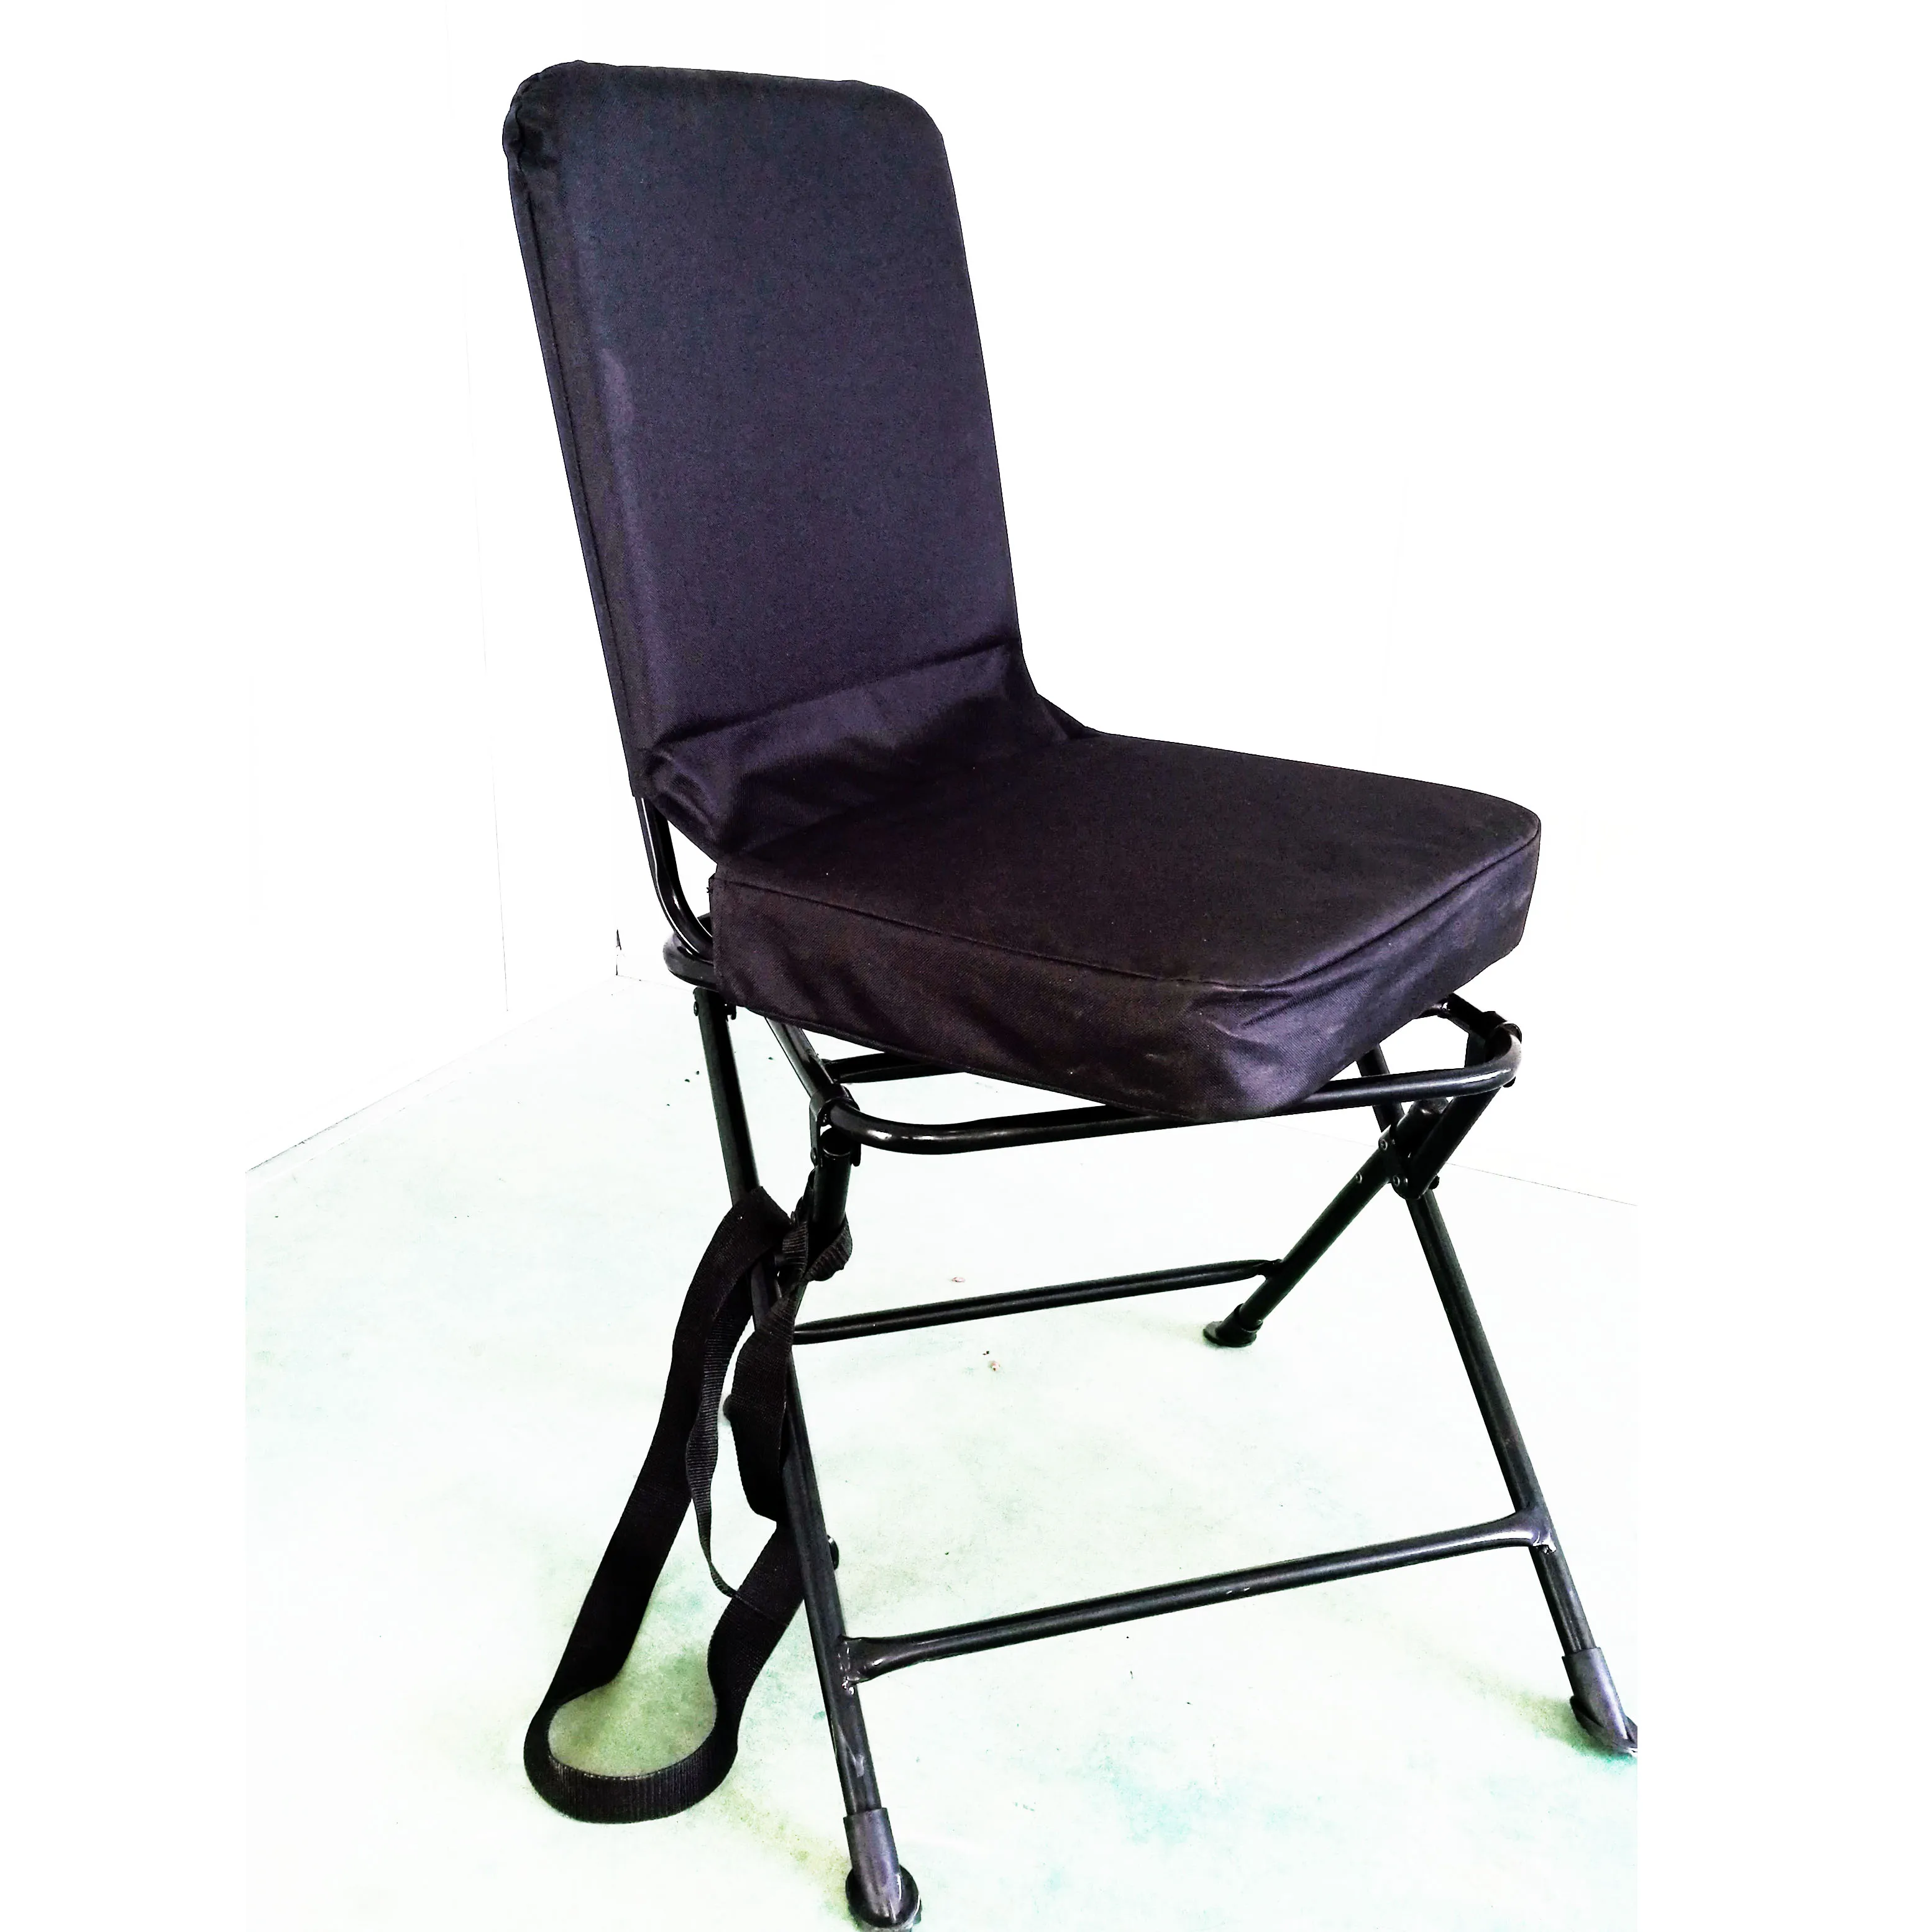 Big Boy Portable Hunting 360 Swivel Chair Buy Hunting Chair